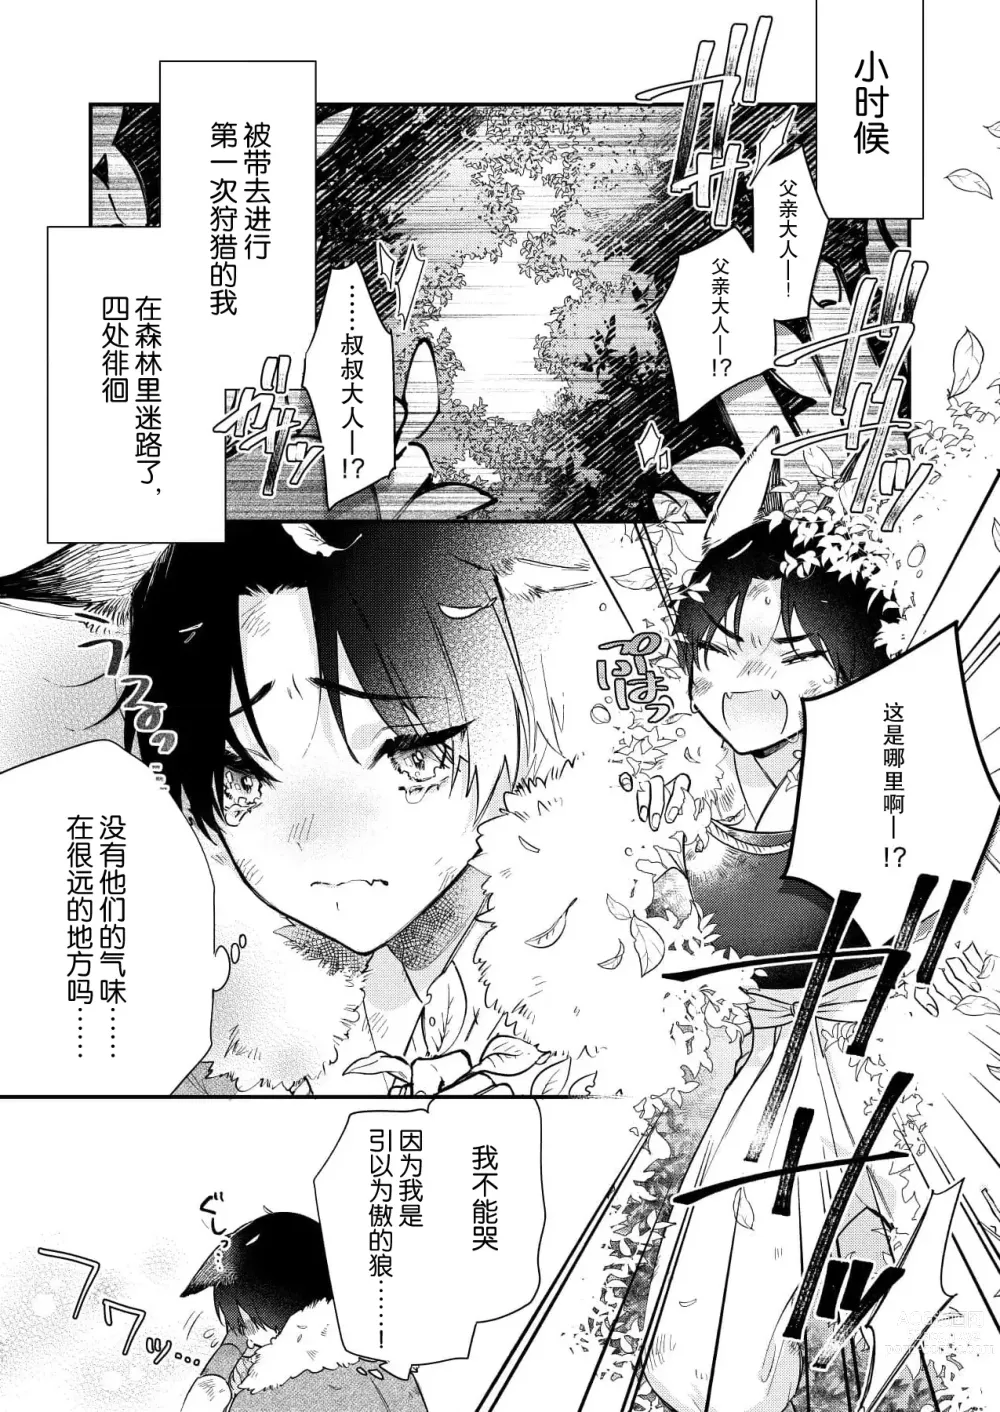 Page 2 of manga 无可奈何花落去 只叹道，命运使然 1-7 end